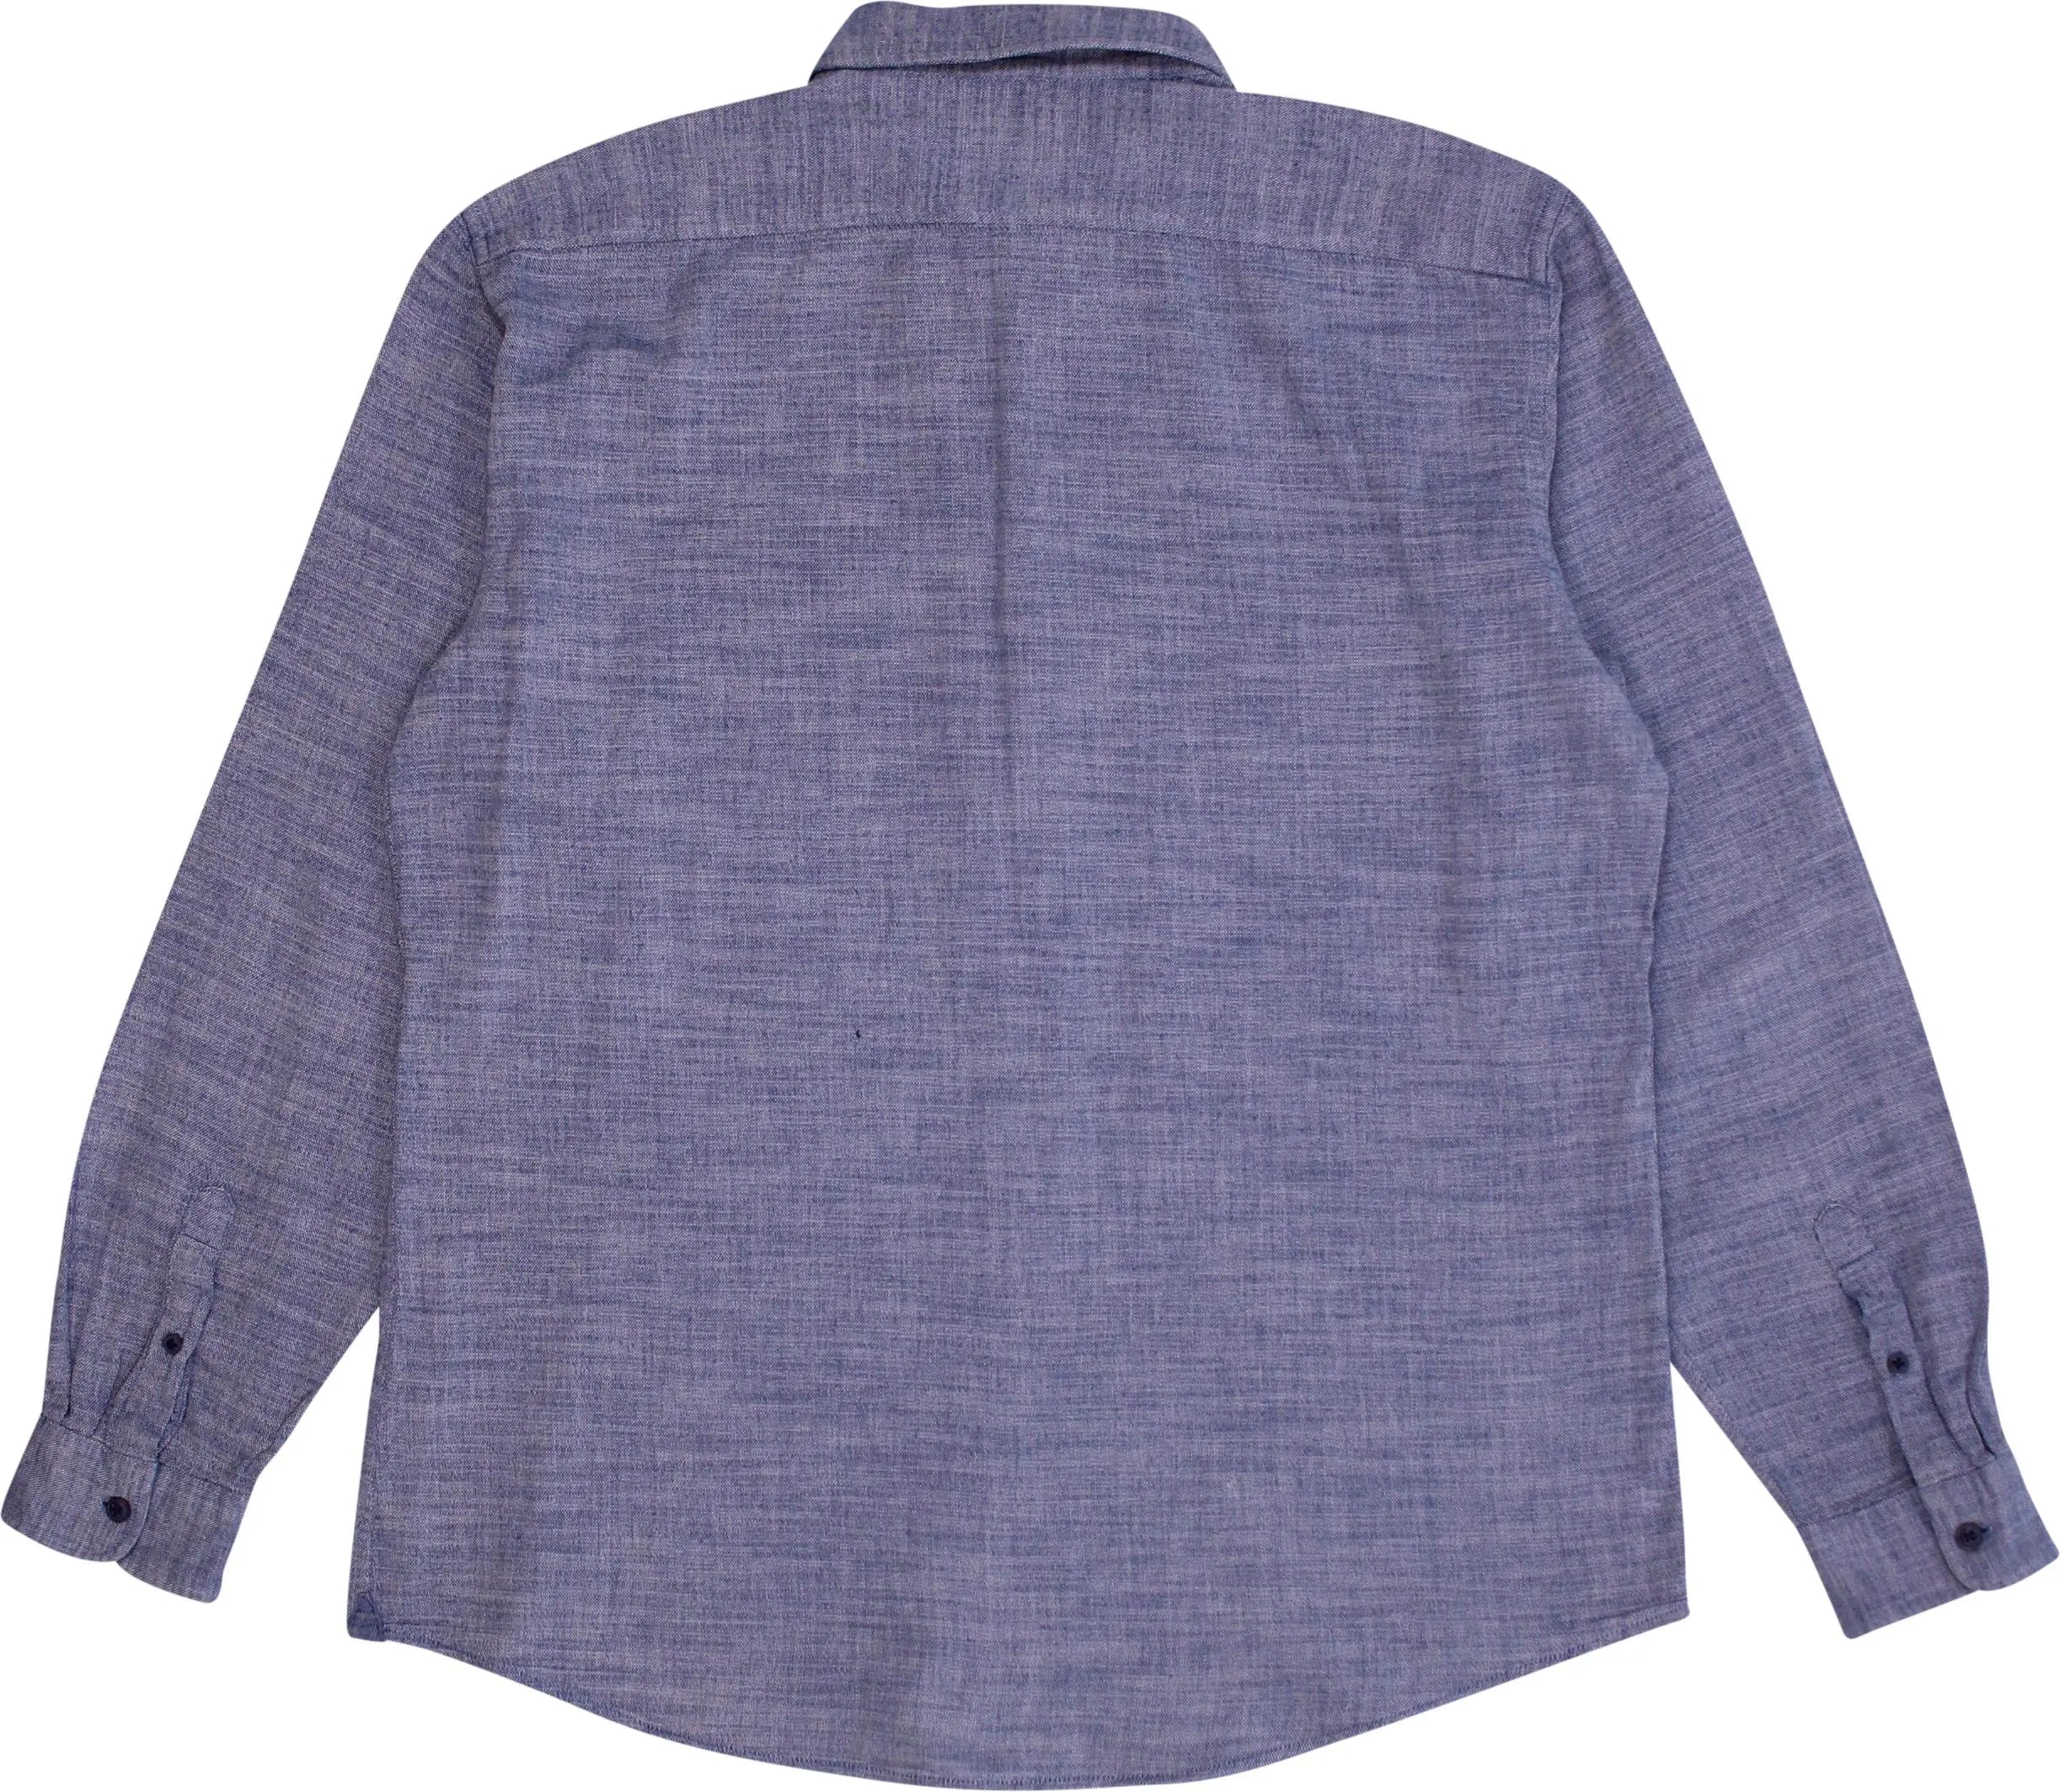 Esprit - Blue Shirt- ThriftTale.com - Vintage and second handclothing